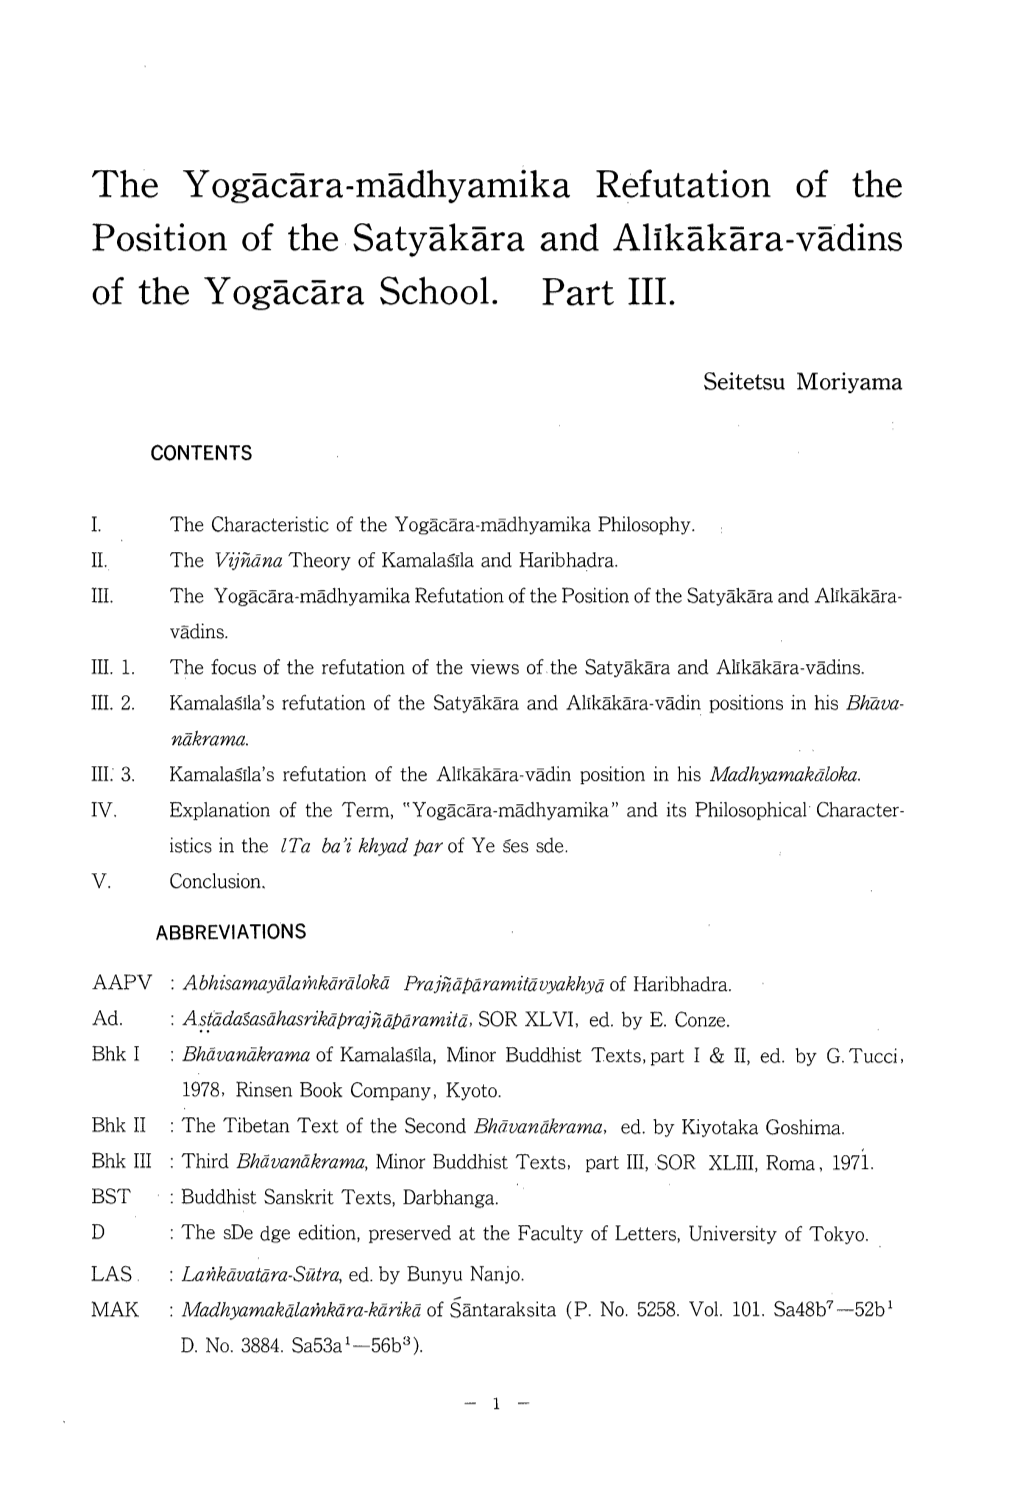 The Yogacara-Madhyamika Refutation of the Position of the Satyakara and Alikakara-Vadins of the Yogacara School